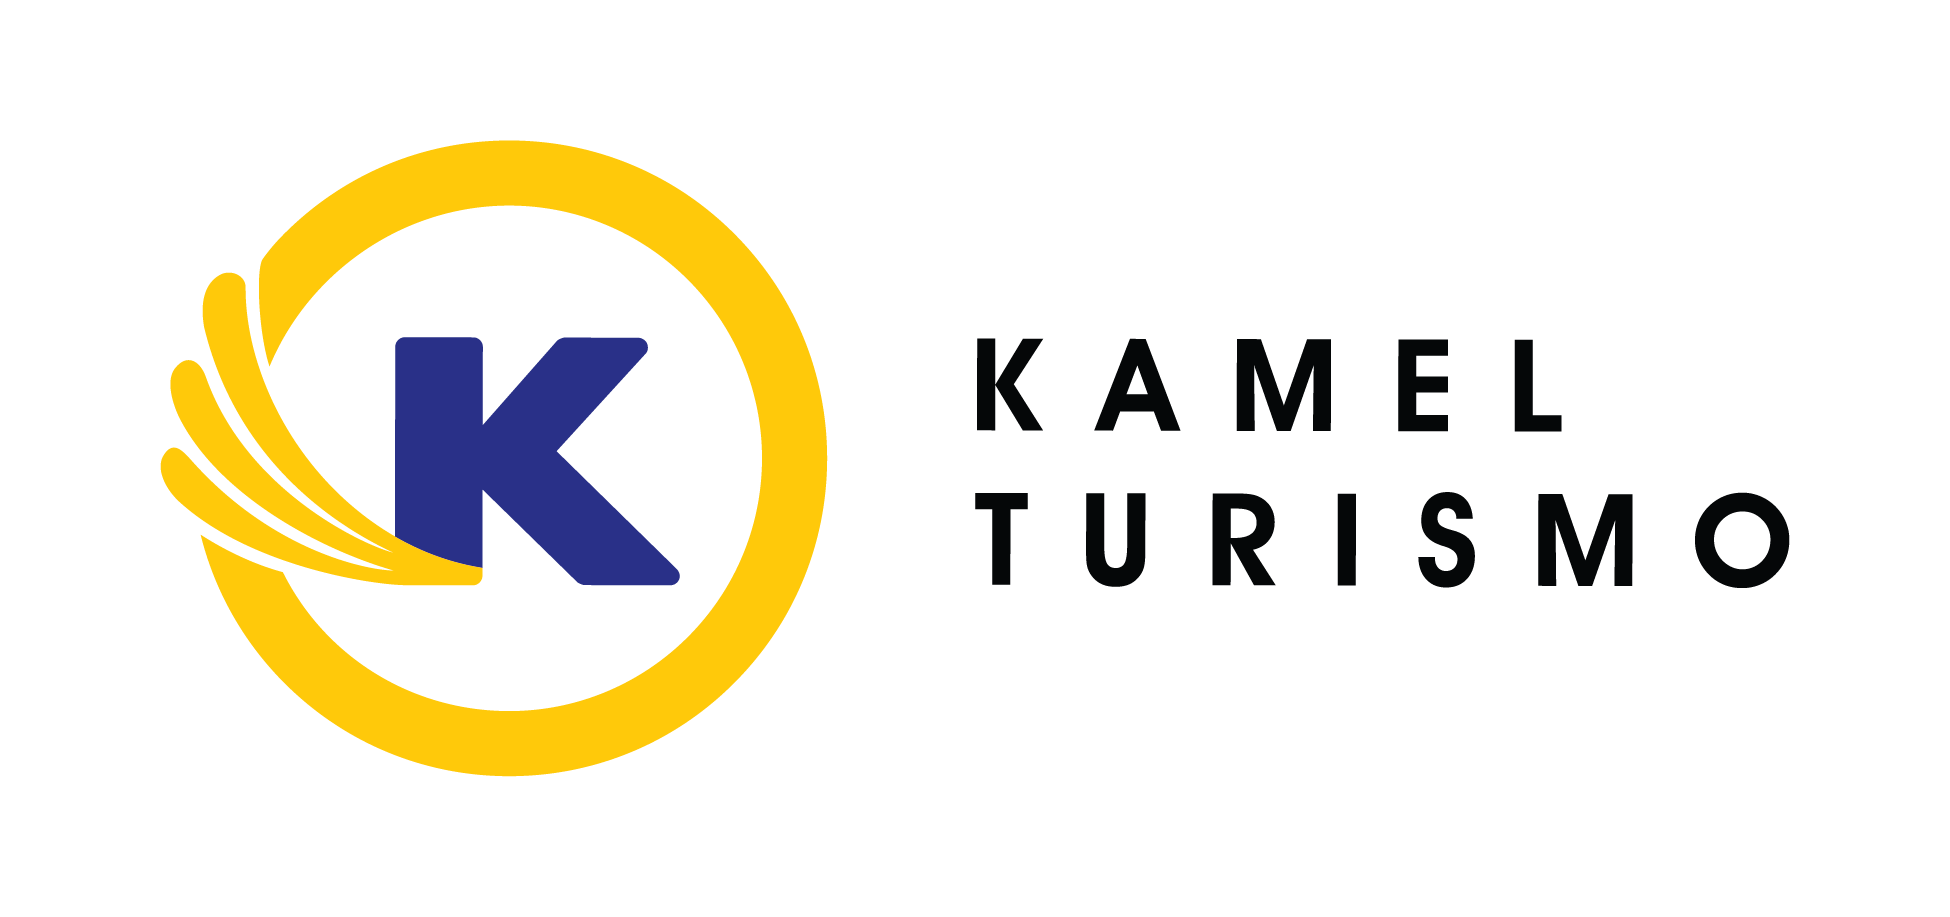 Kamel Turismo